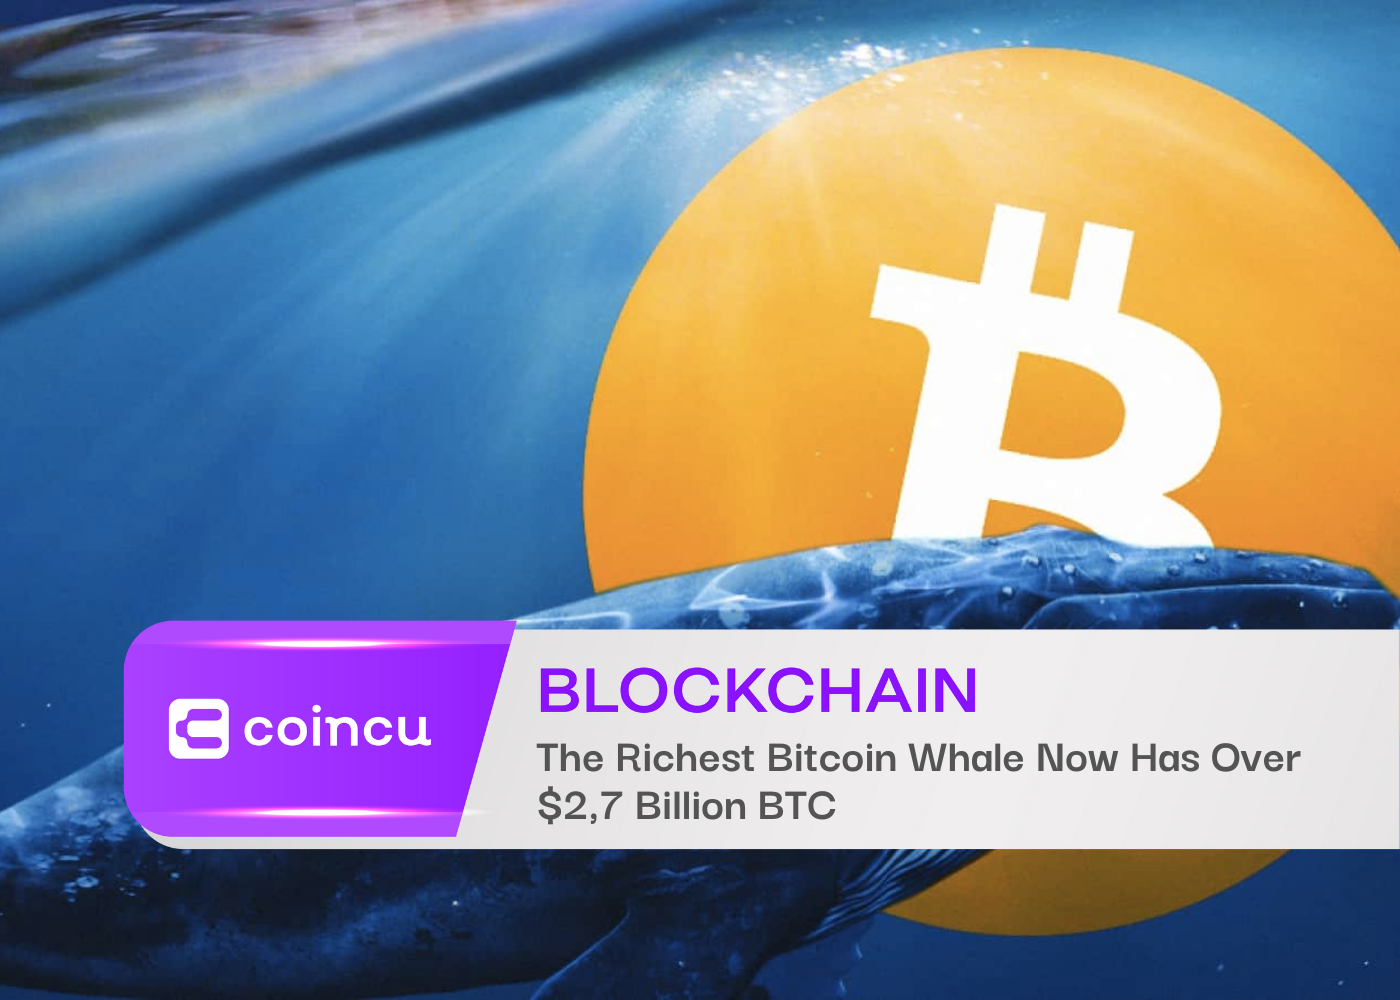 The Richest Bitcoin Whale Now Has Over $2,7 Billion BTC